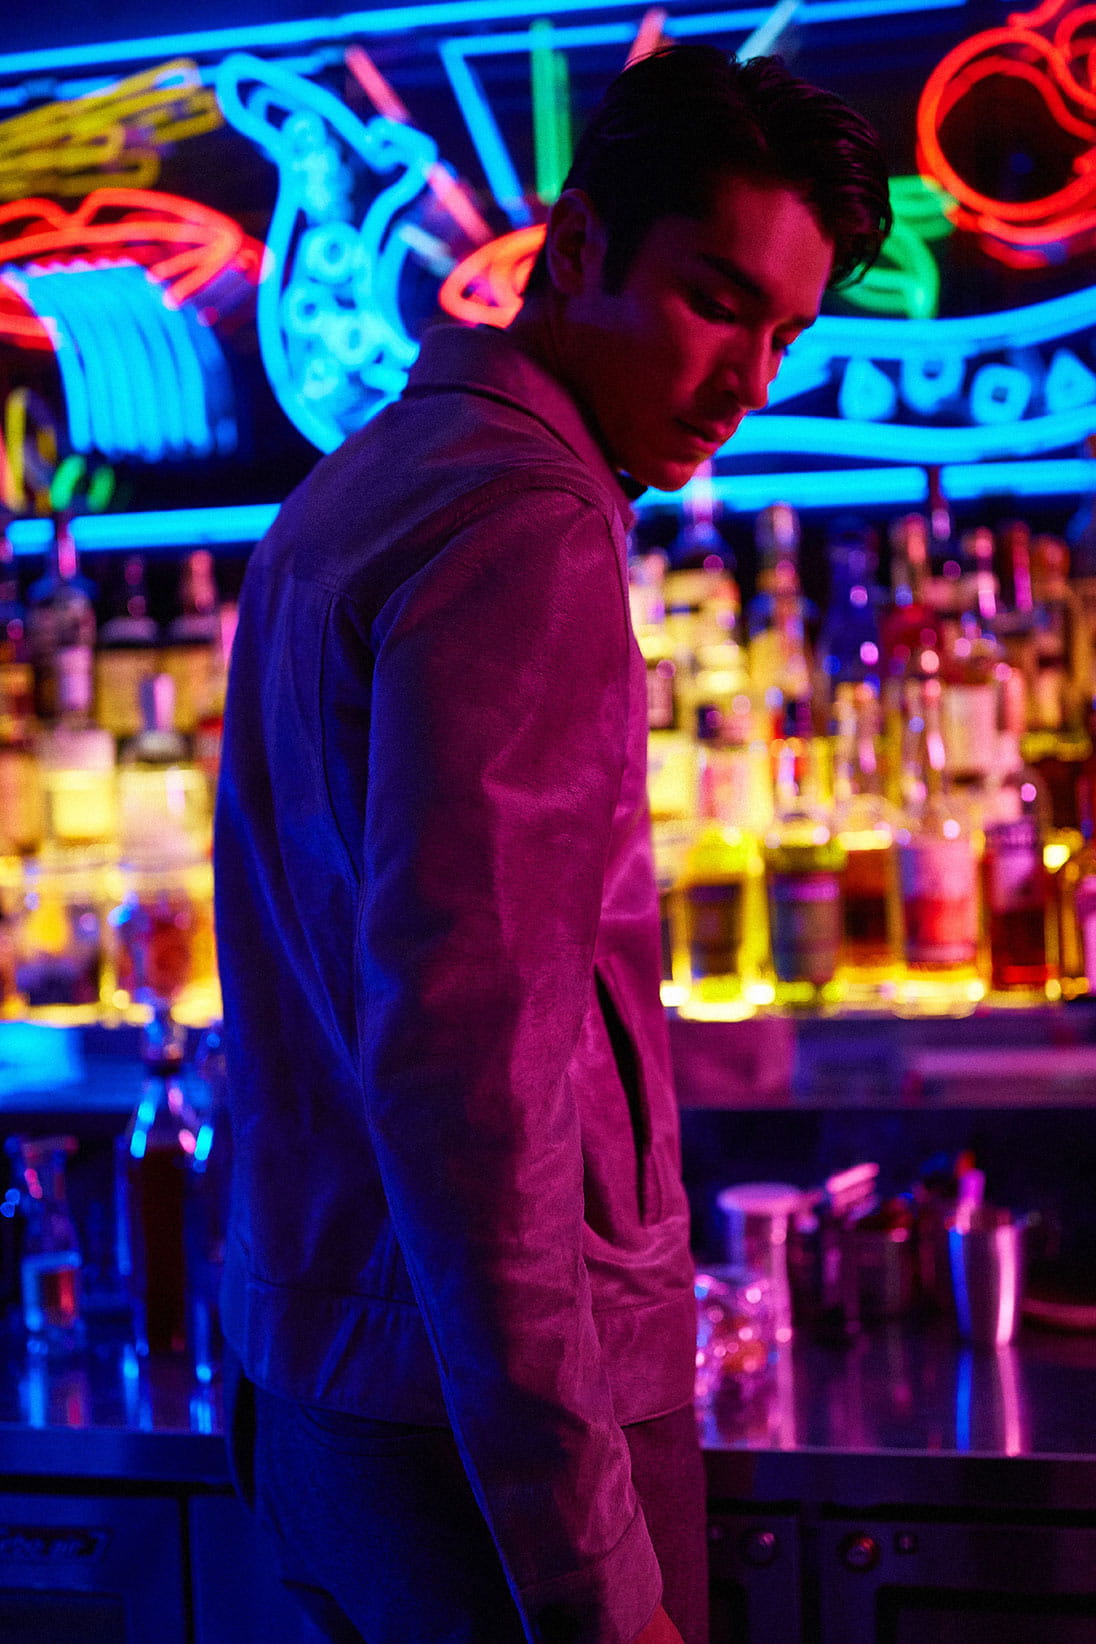 A model stands at a neon-lit bar wearing Salvatore Ferragamo and Hermès